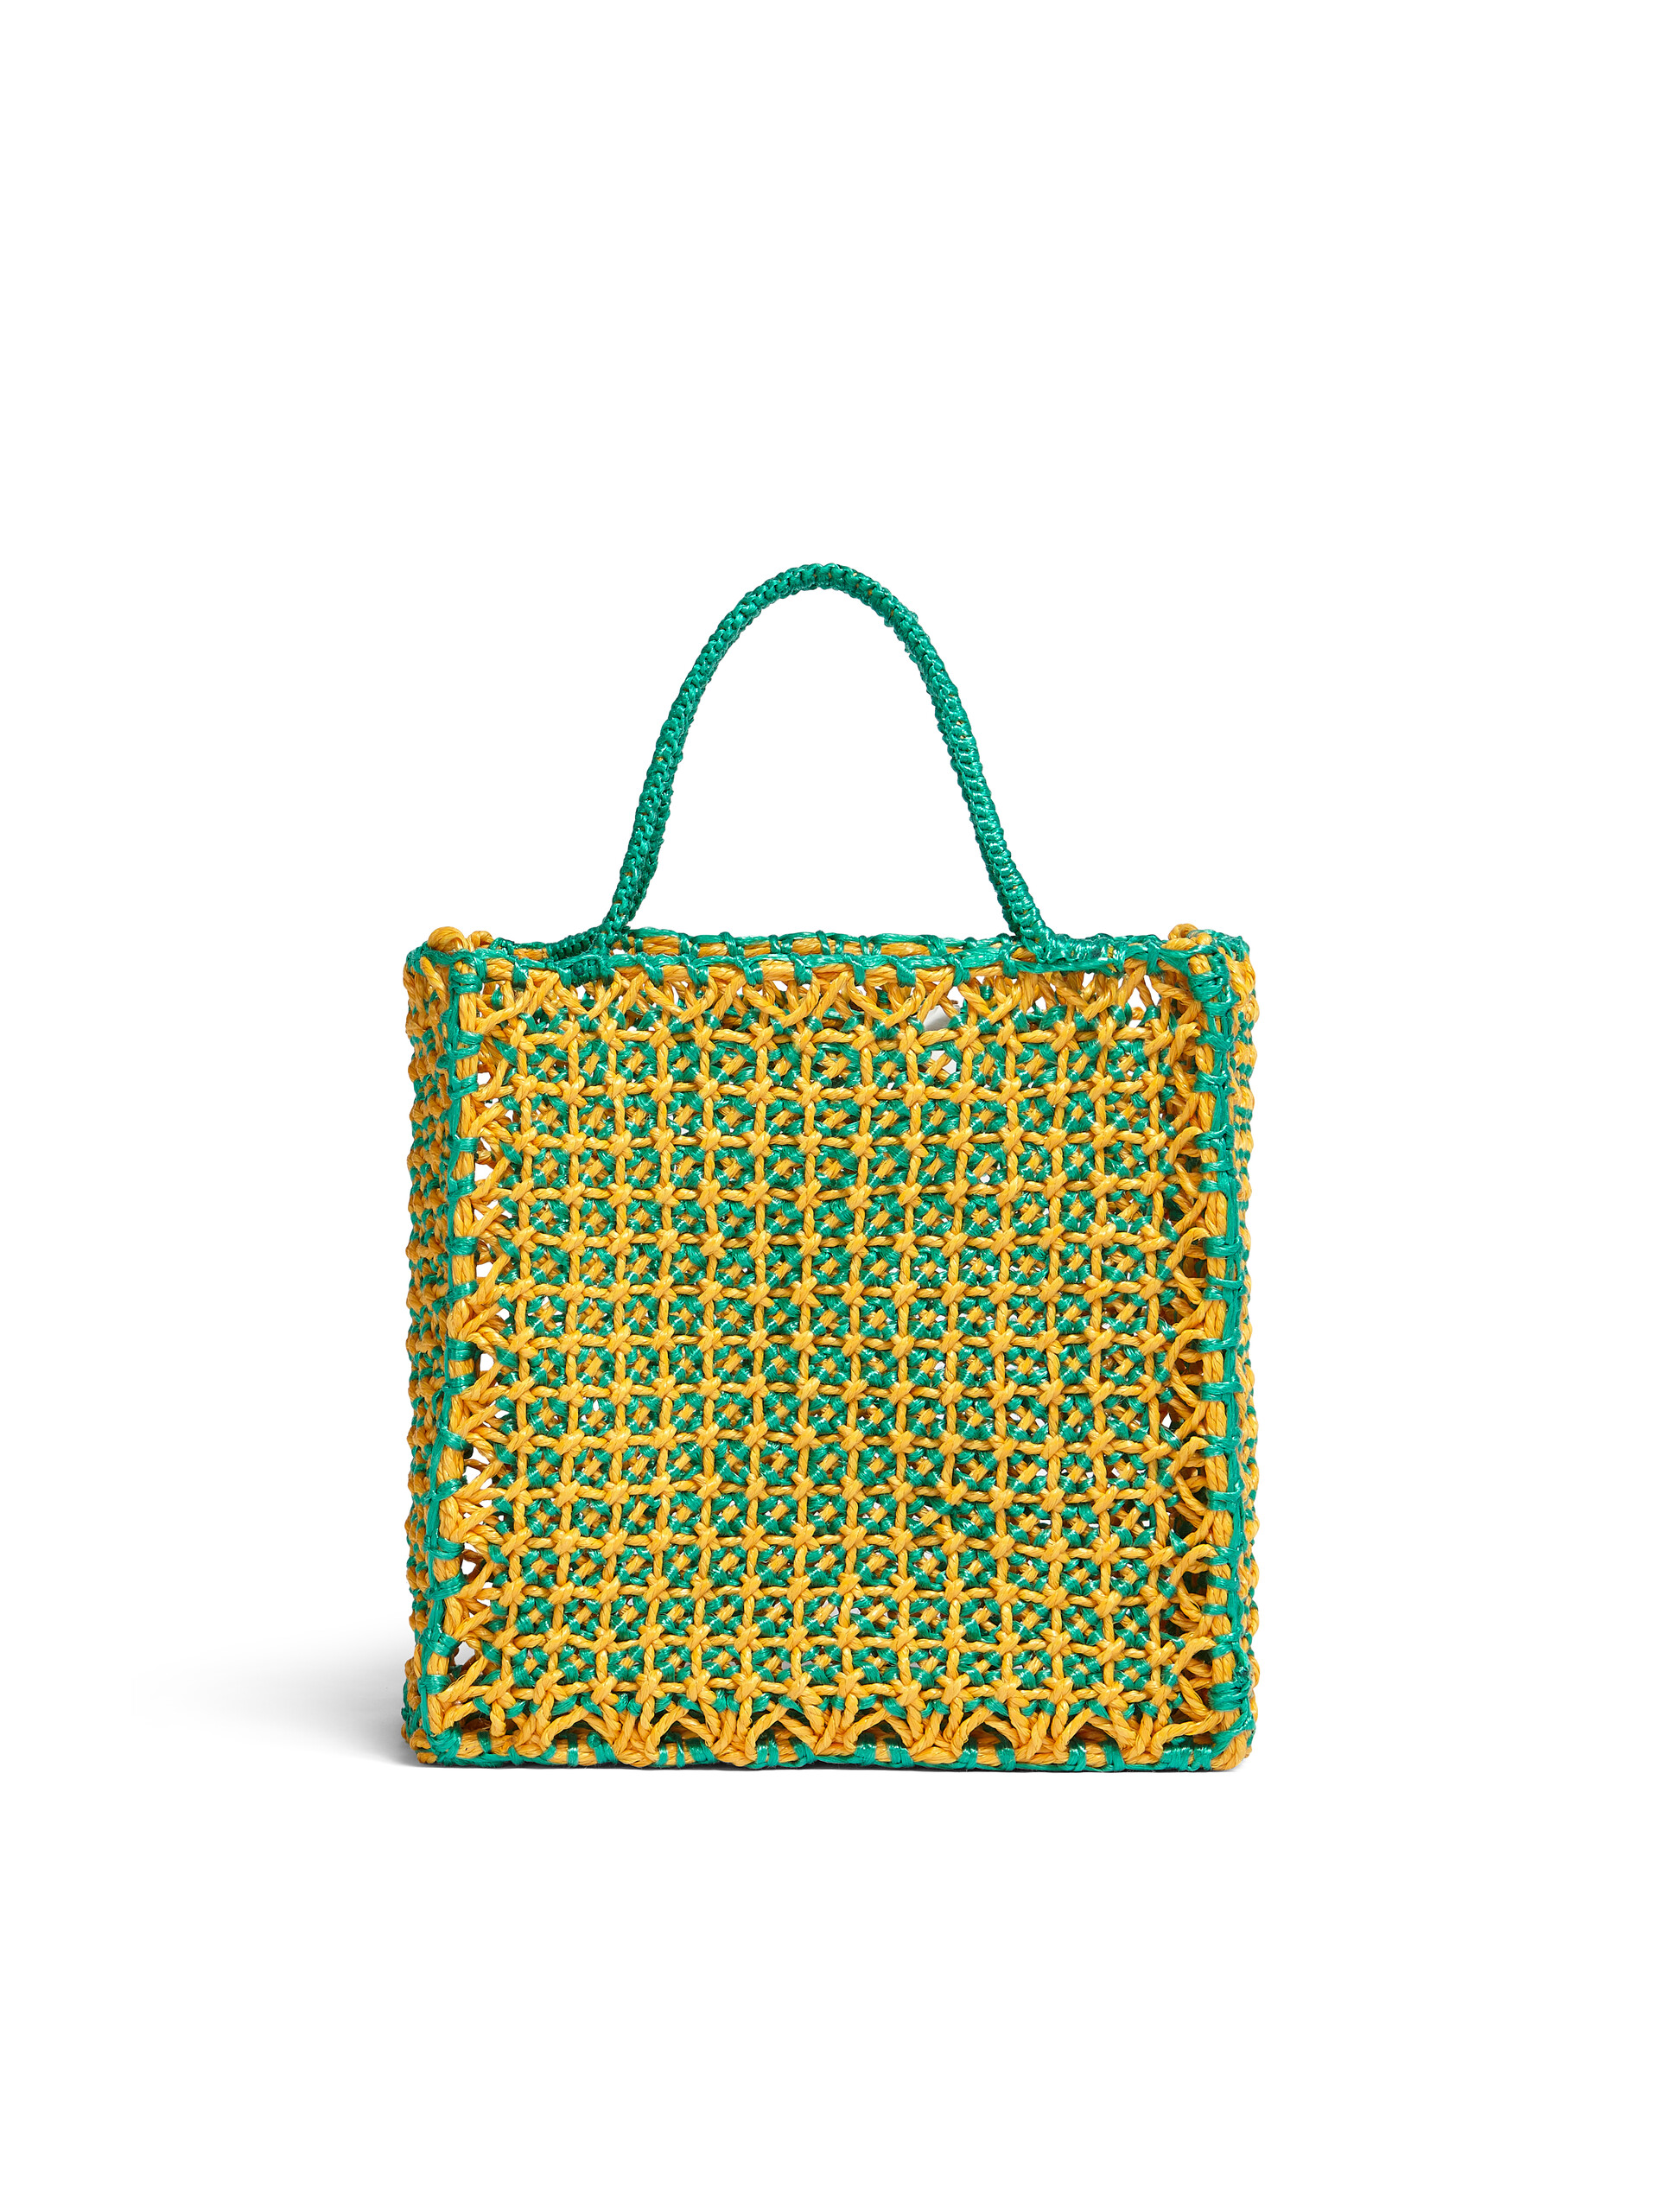 MARNI MARKET JURTA large bag in green and yellow crochet - Shopping Bags - Image 3